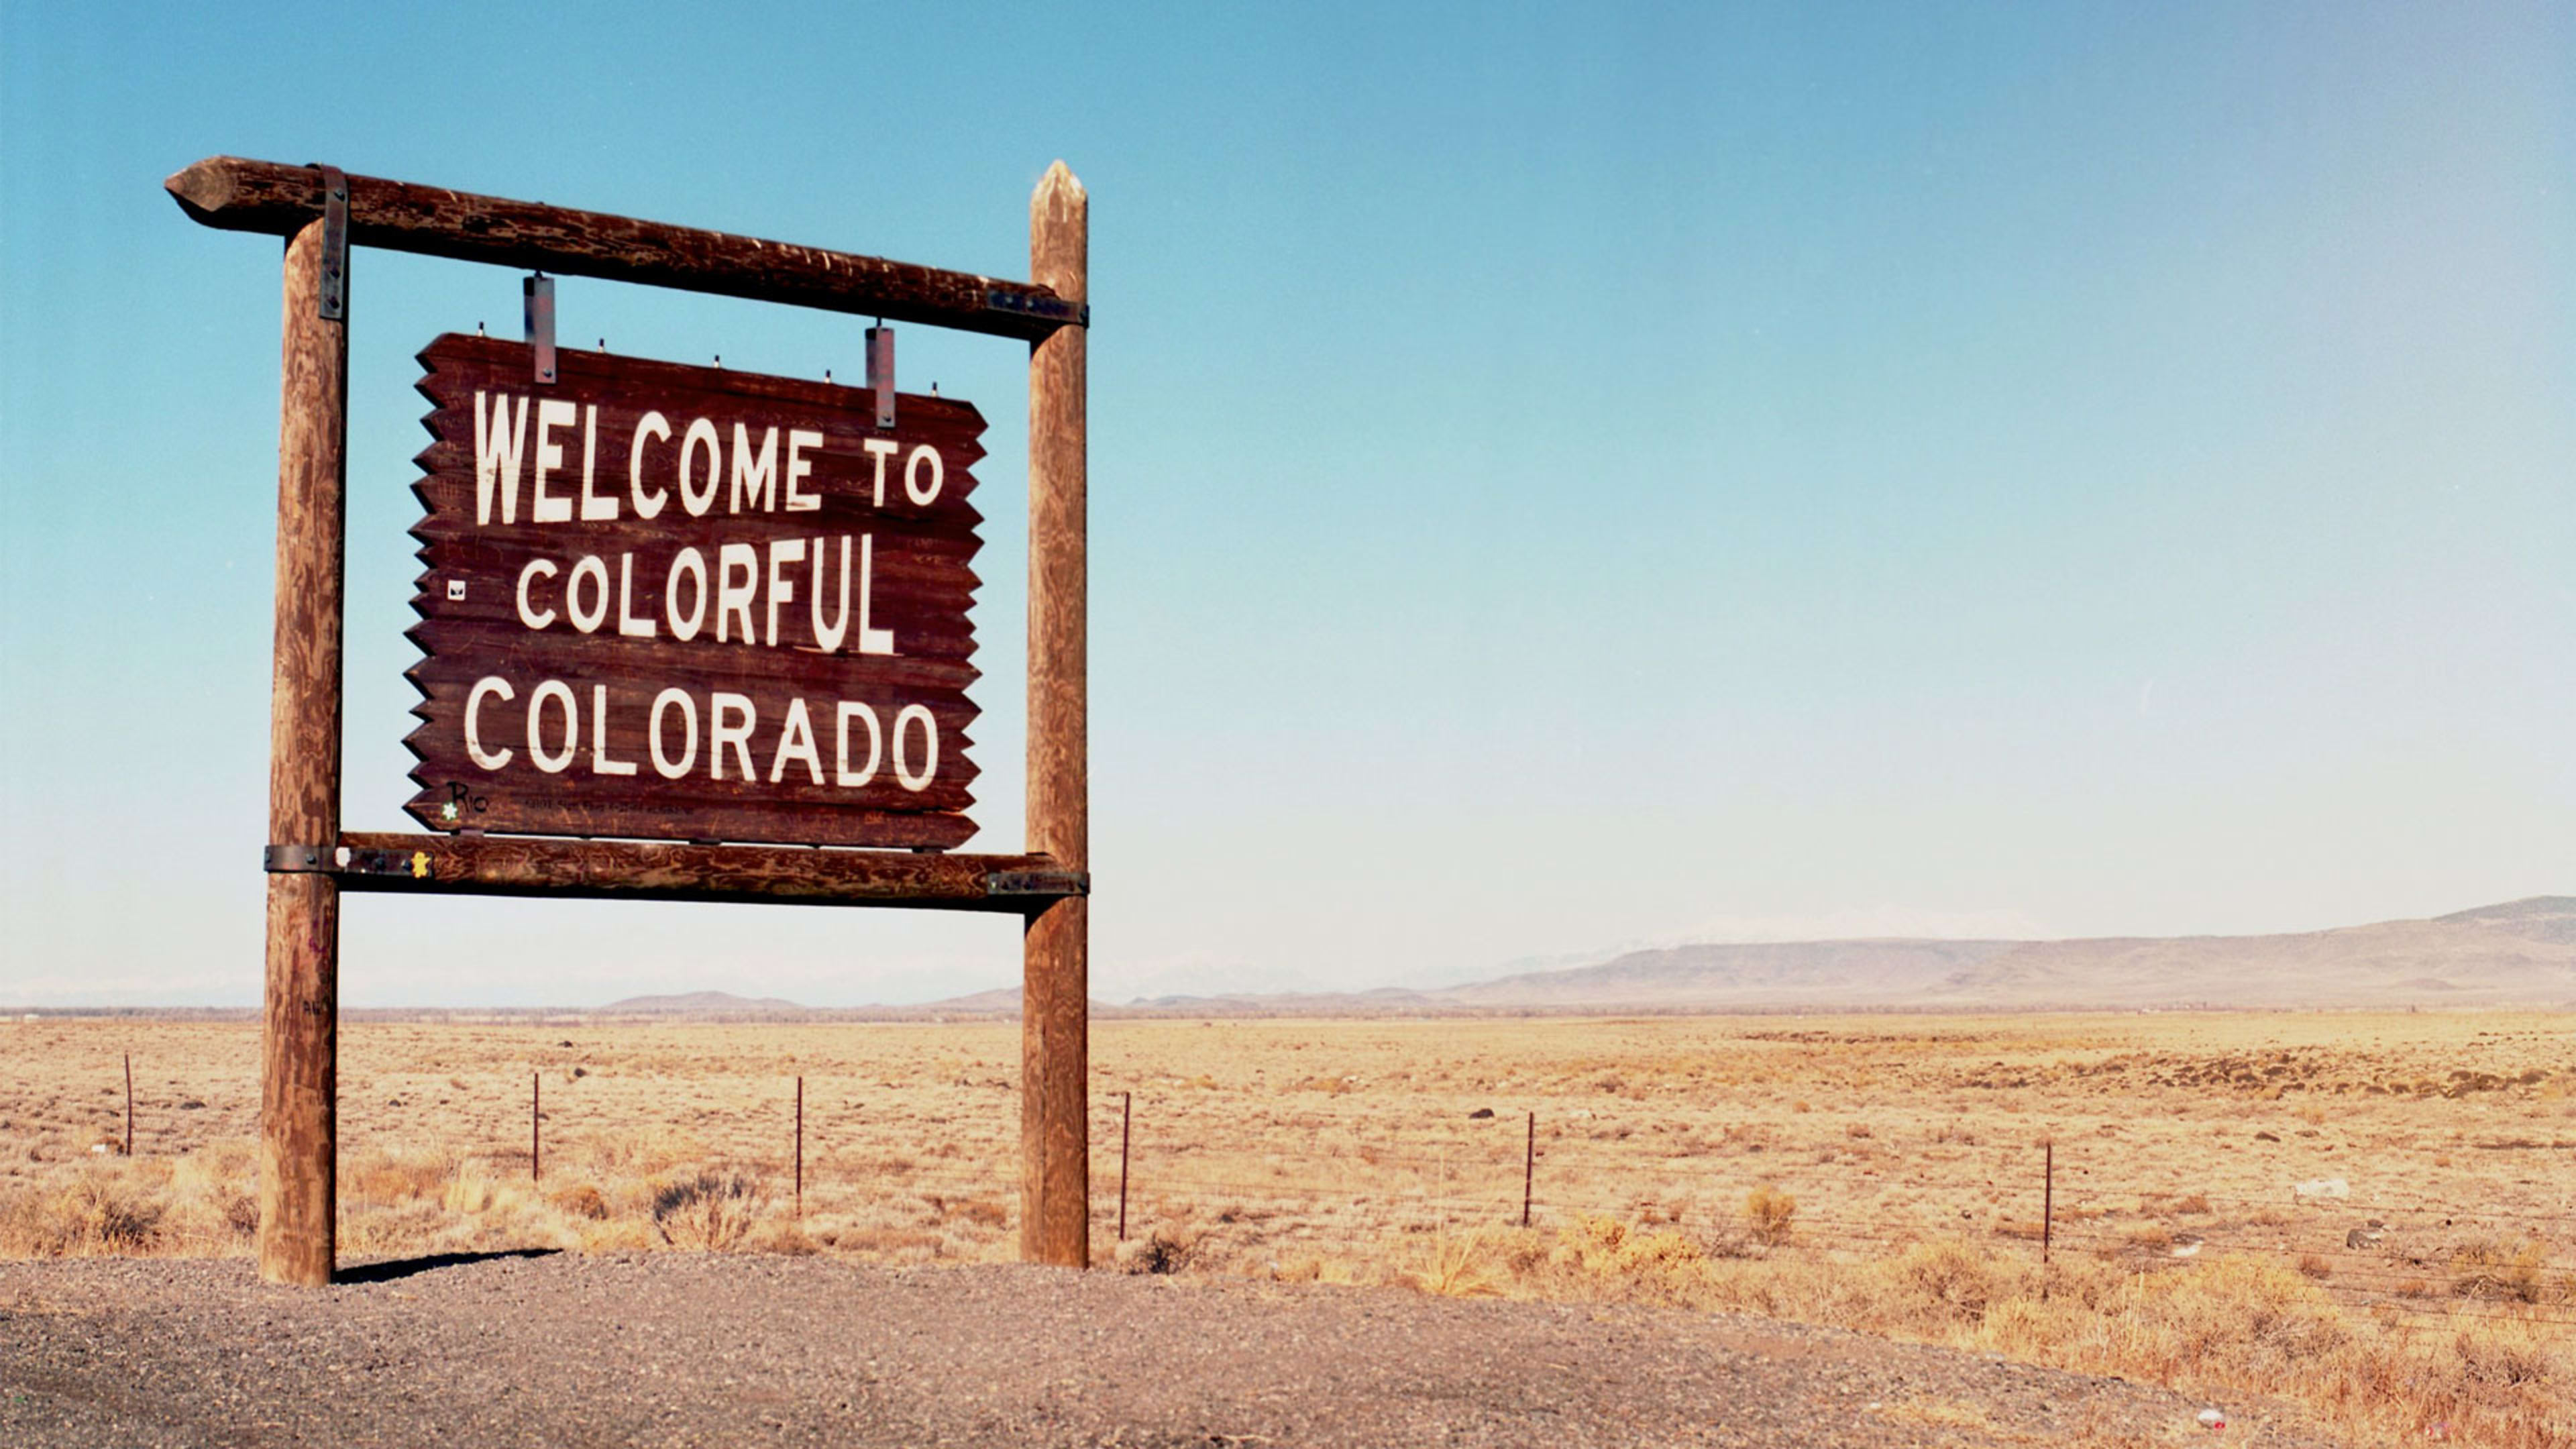 Colorado just fined Uber $8.9 million